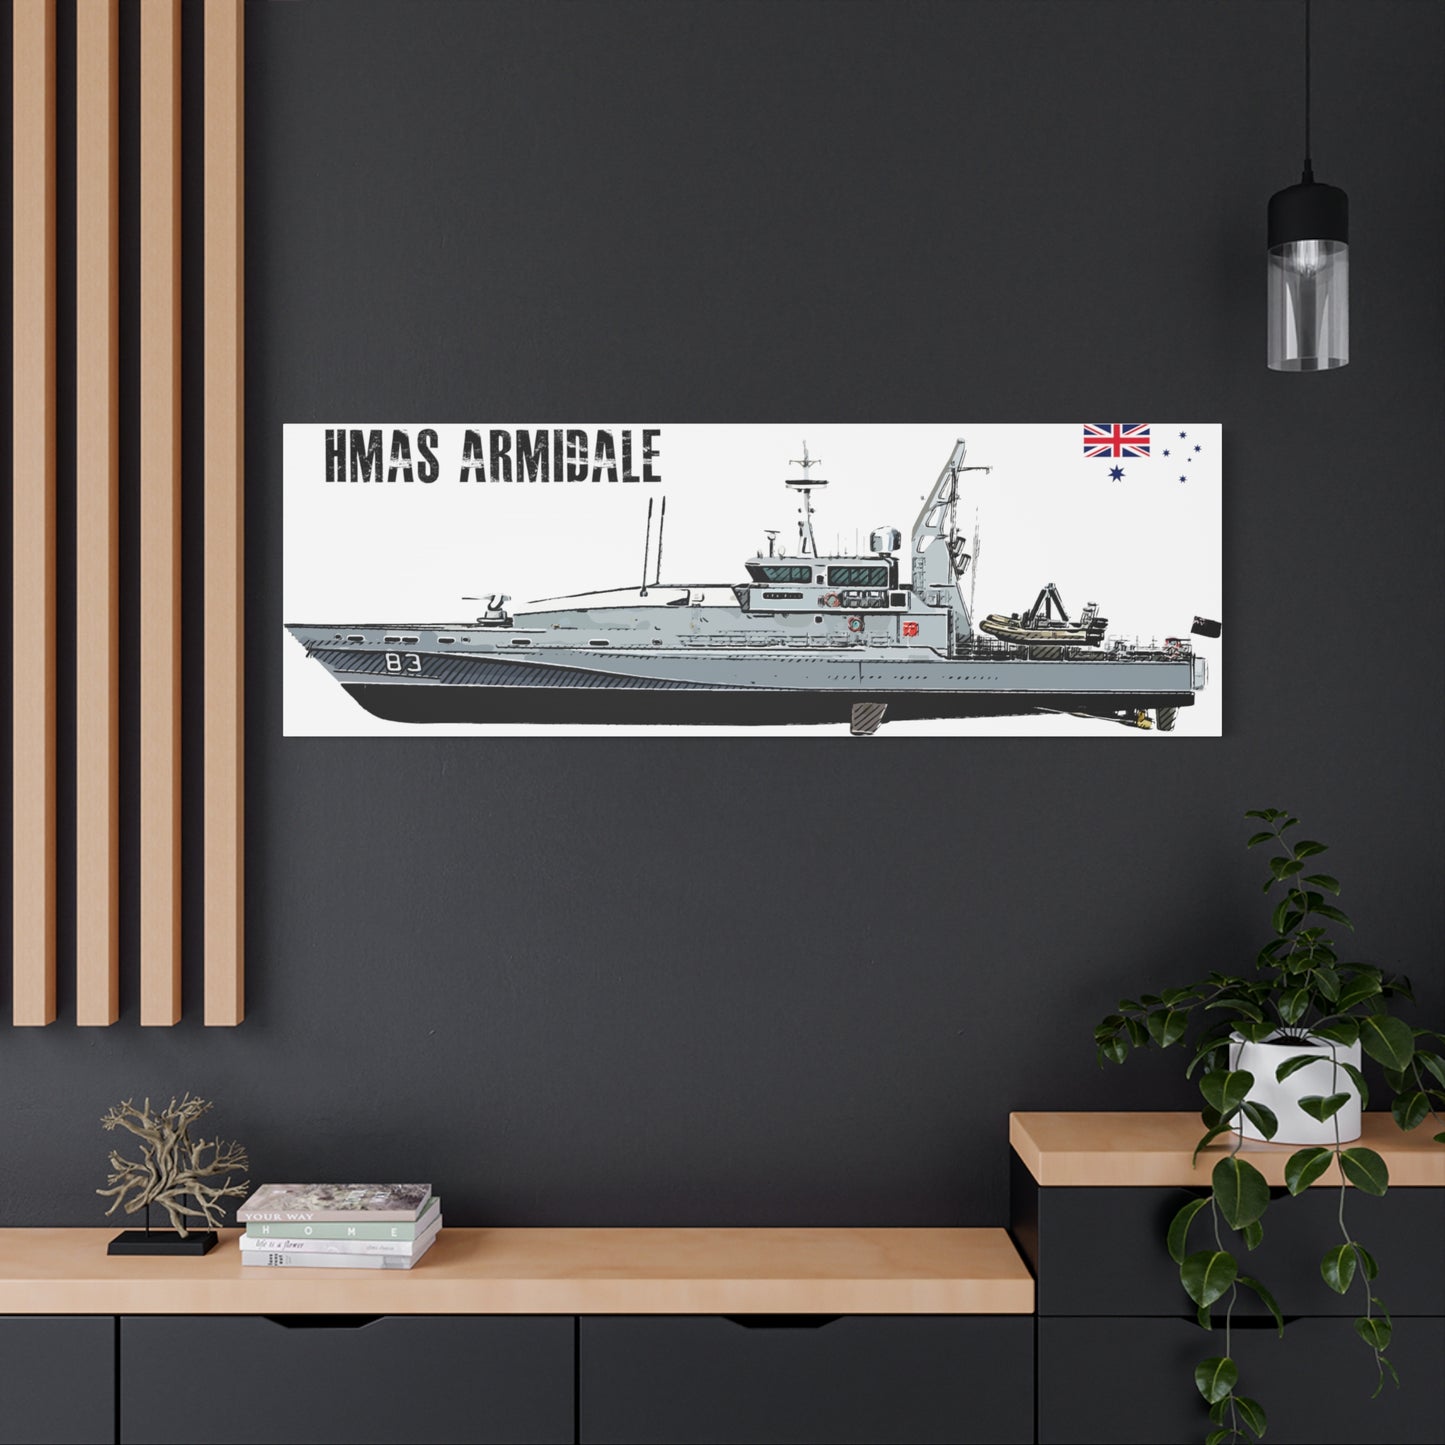 HMAS ARMIDALE